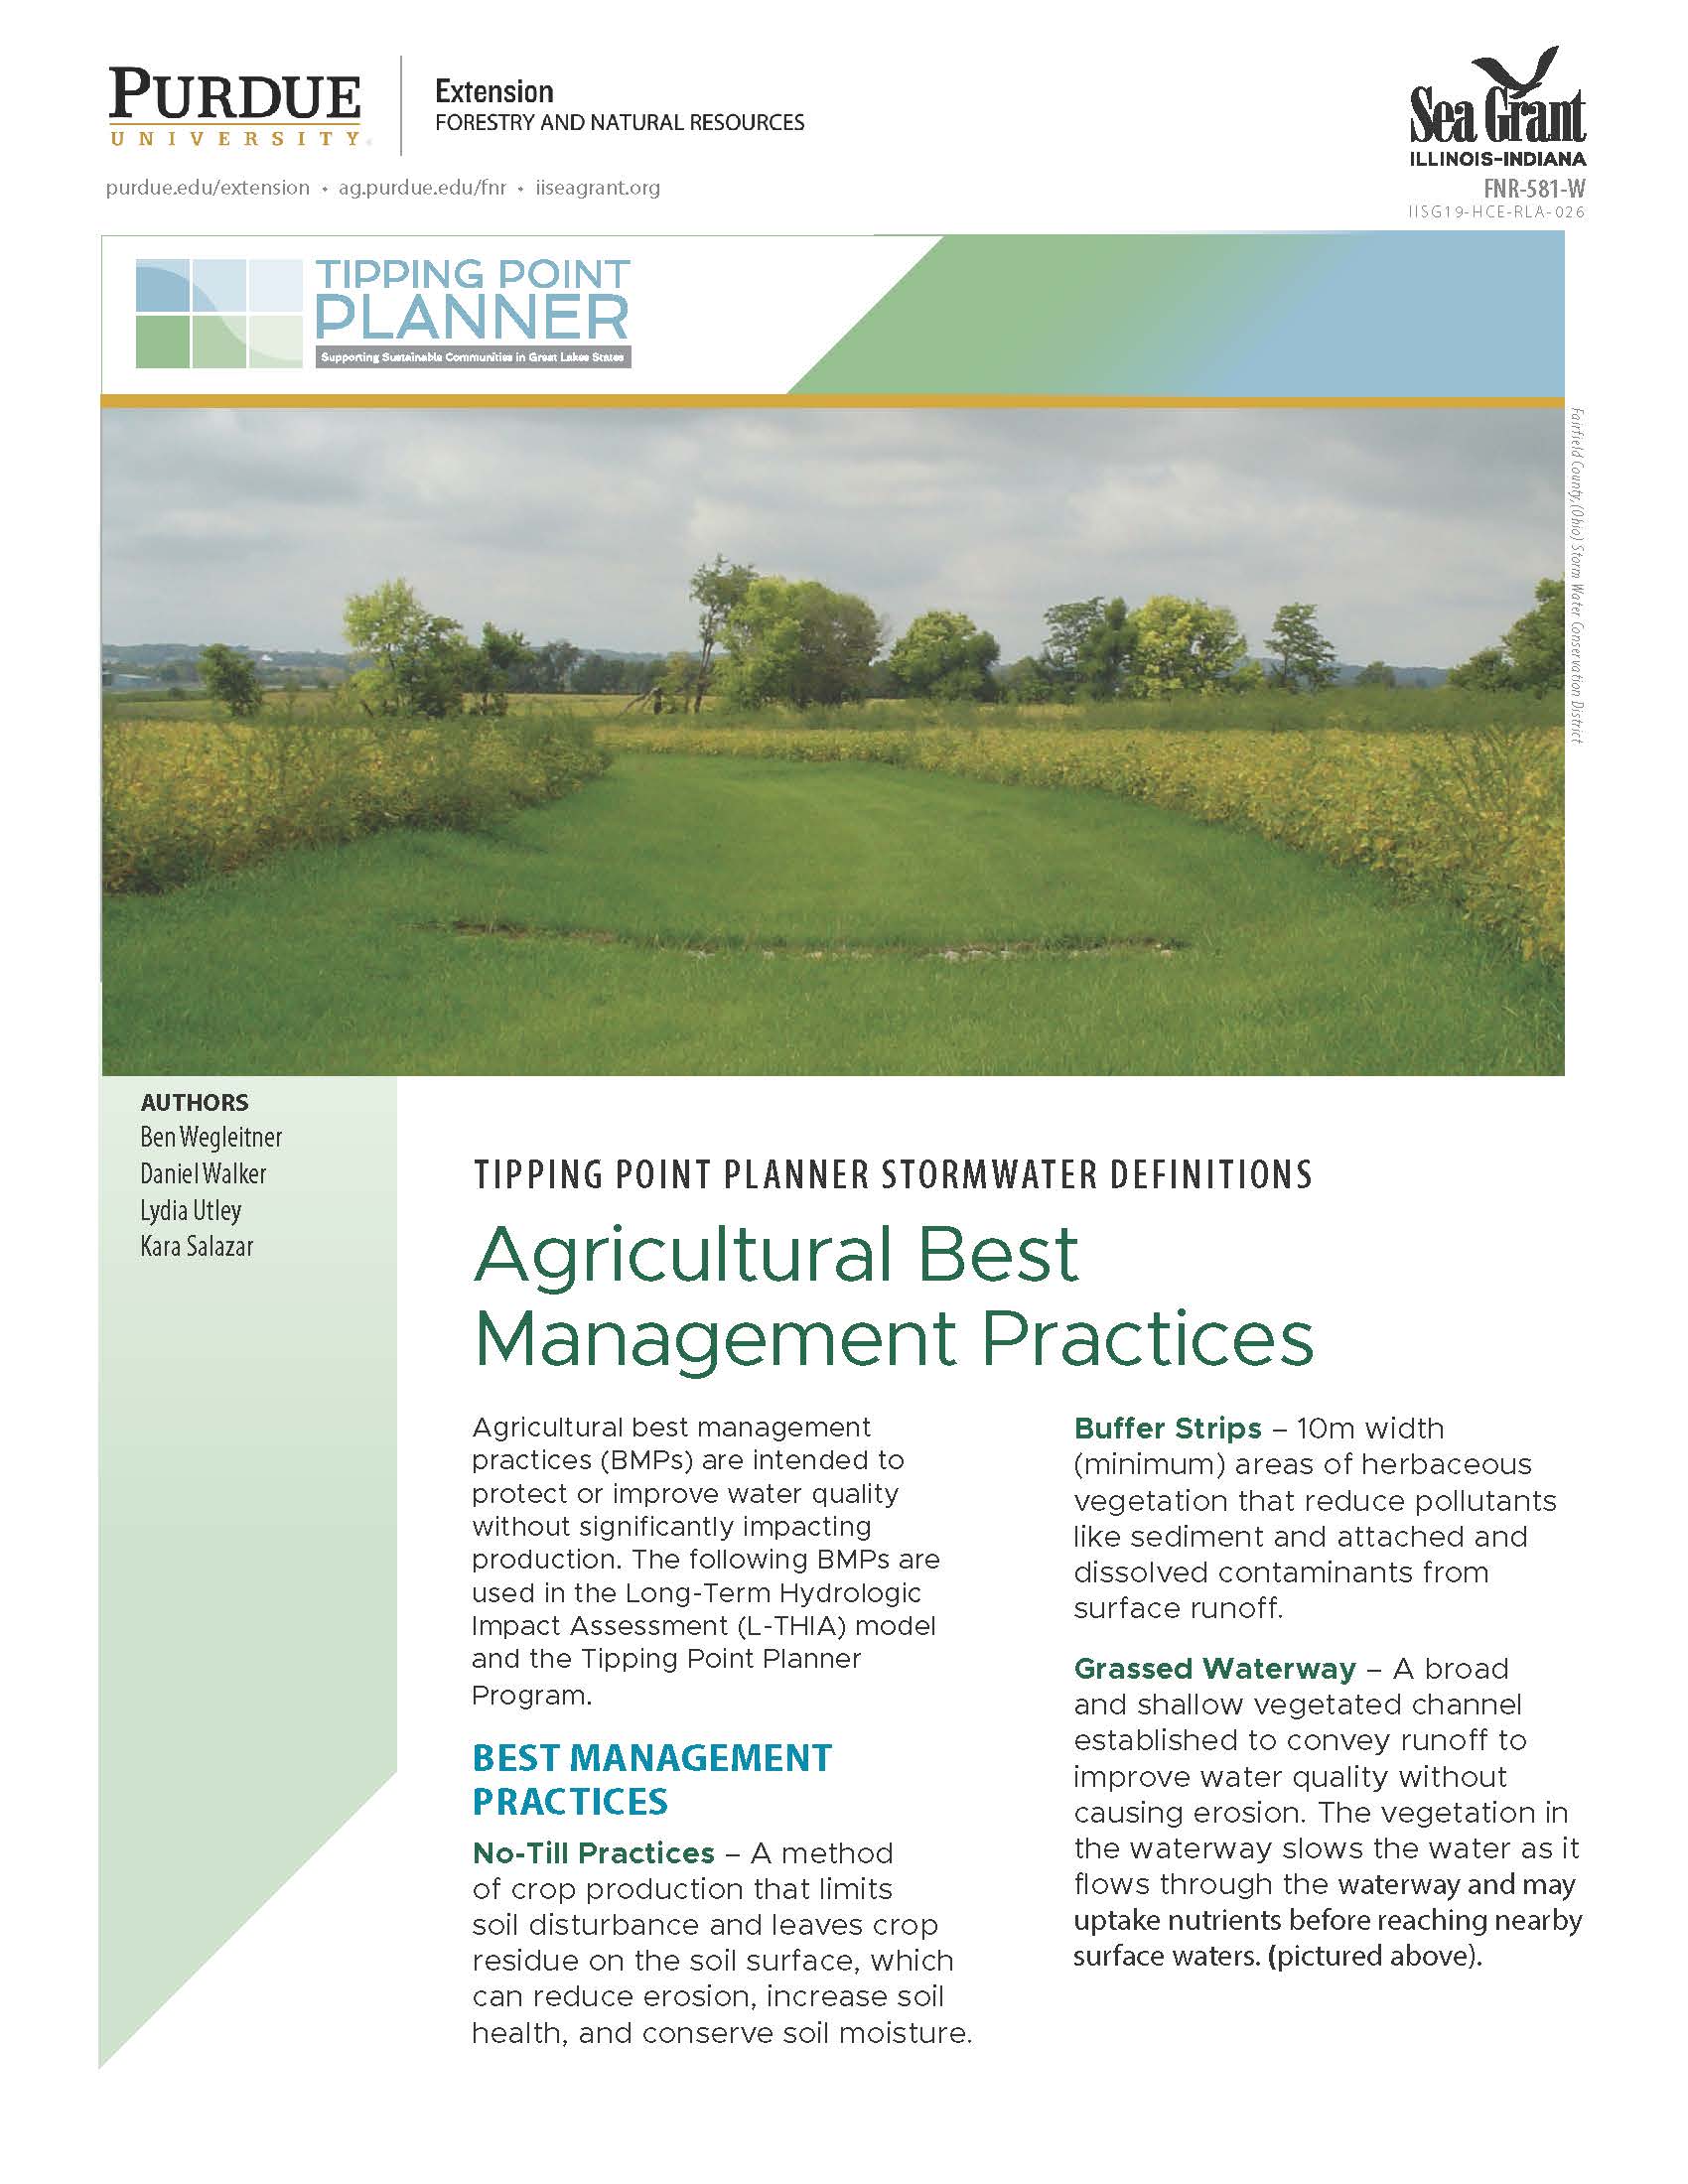 Agricultural Best Management Practices